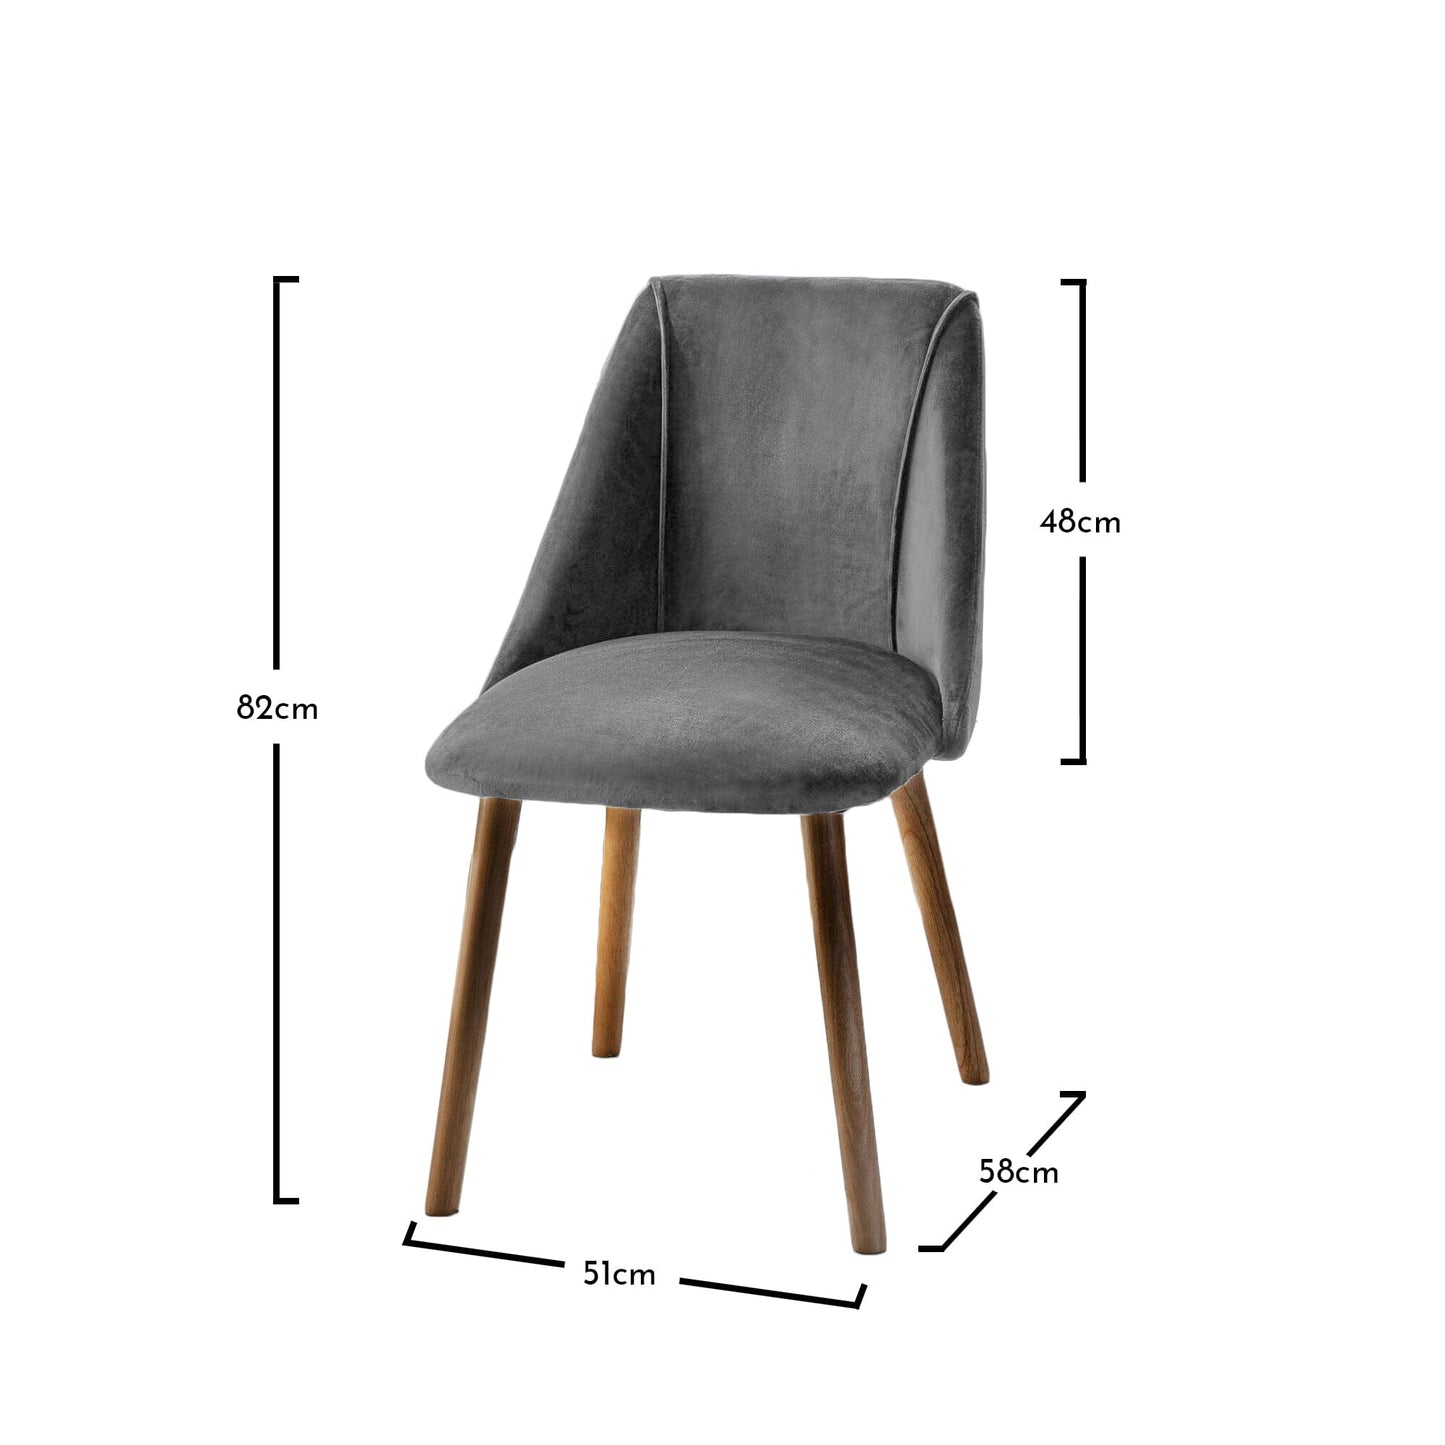 Freya dining chairs - set of 2 - grey and dark wood